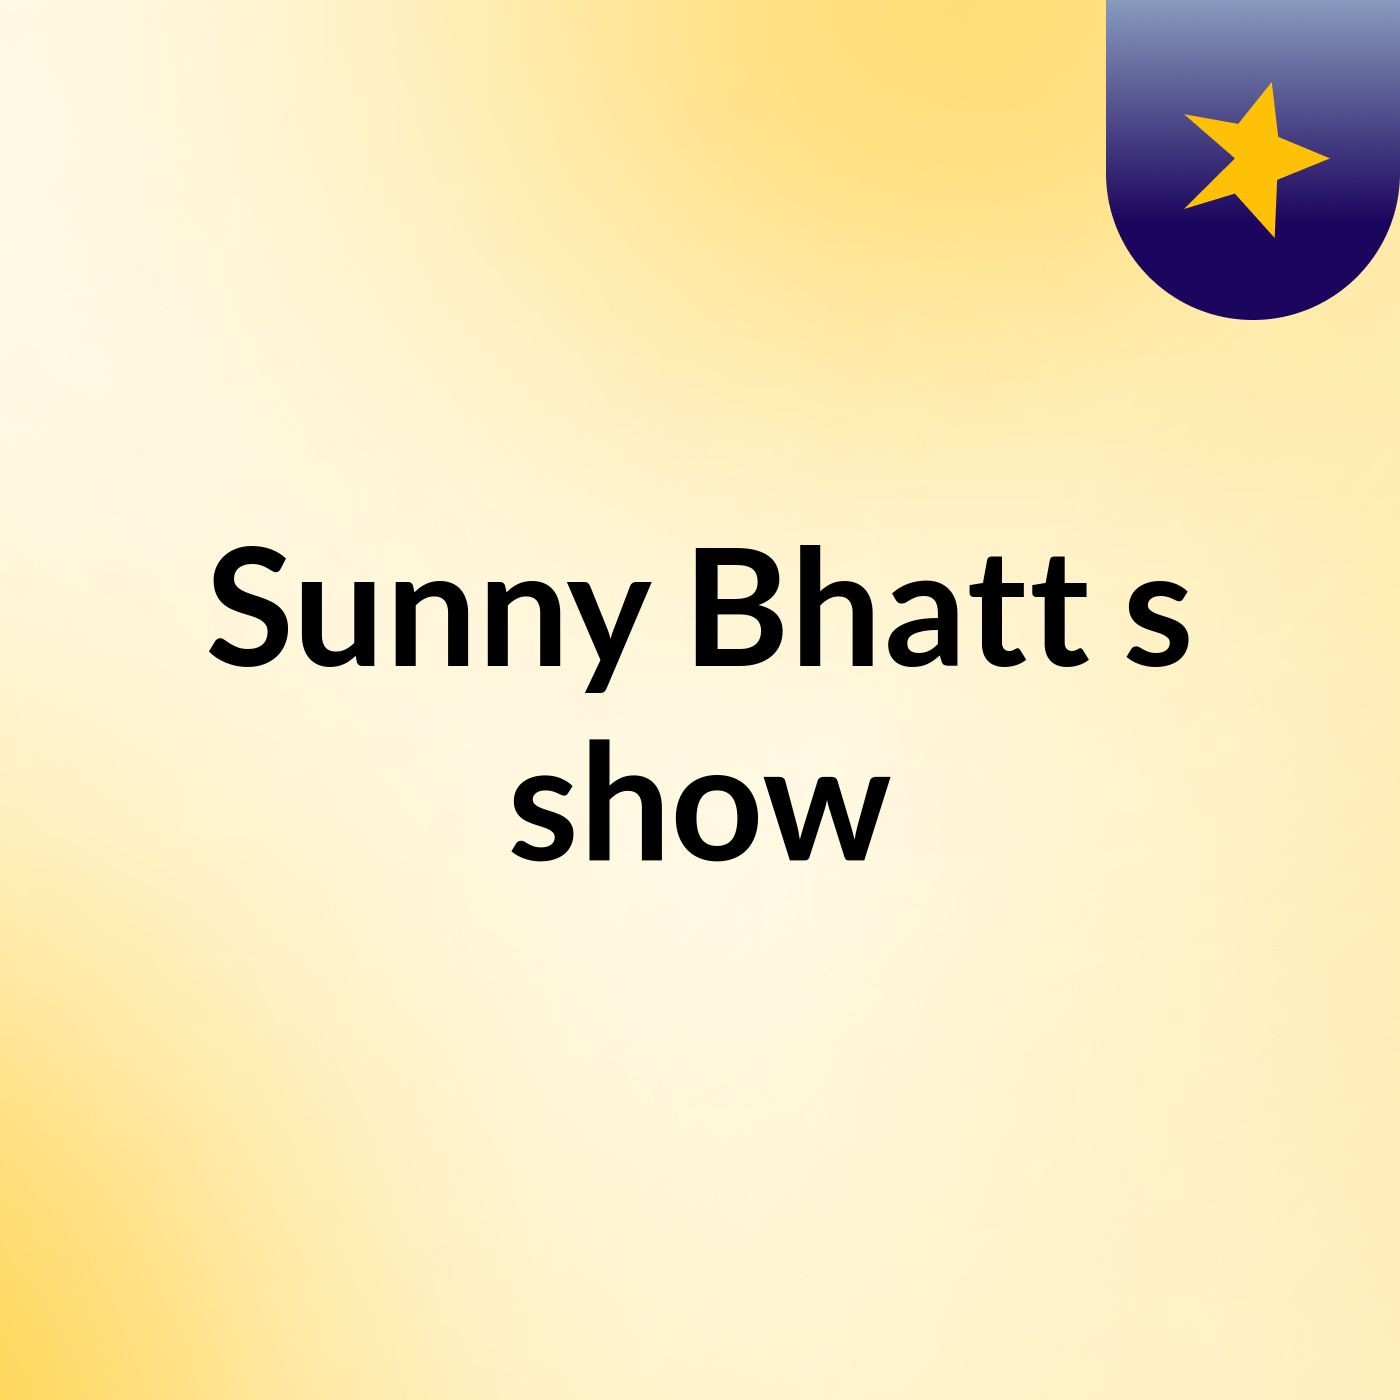 Sunny Bhatt's show